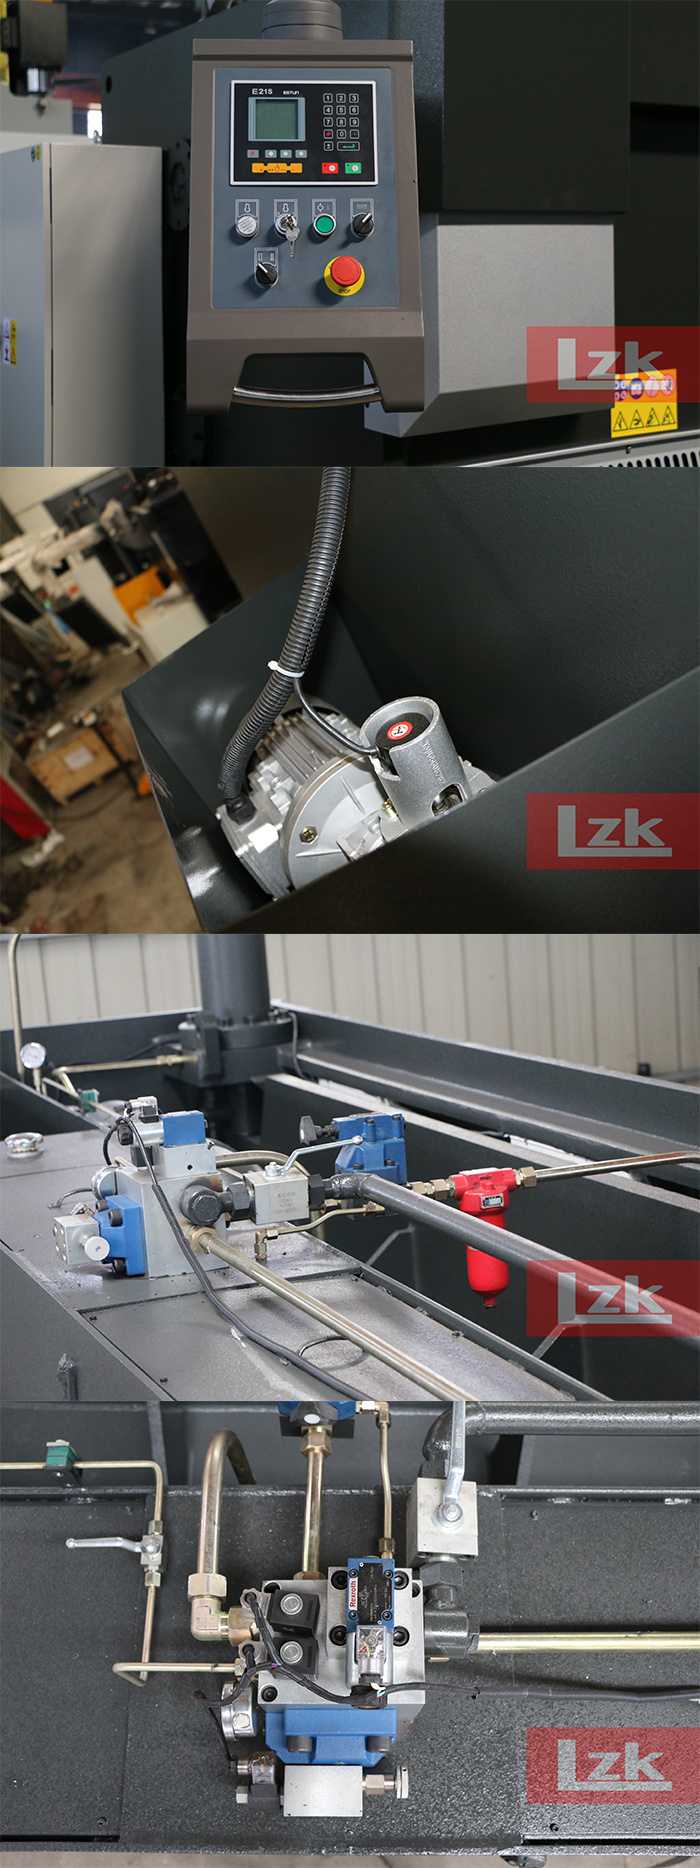 10mmx6000mm Hydrauic CNC Plate Shear Machine